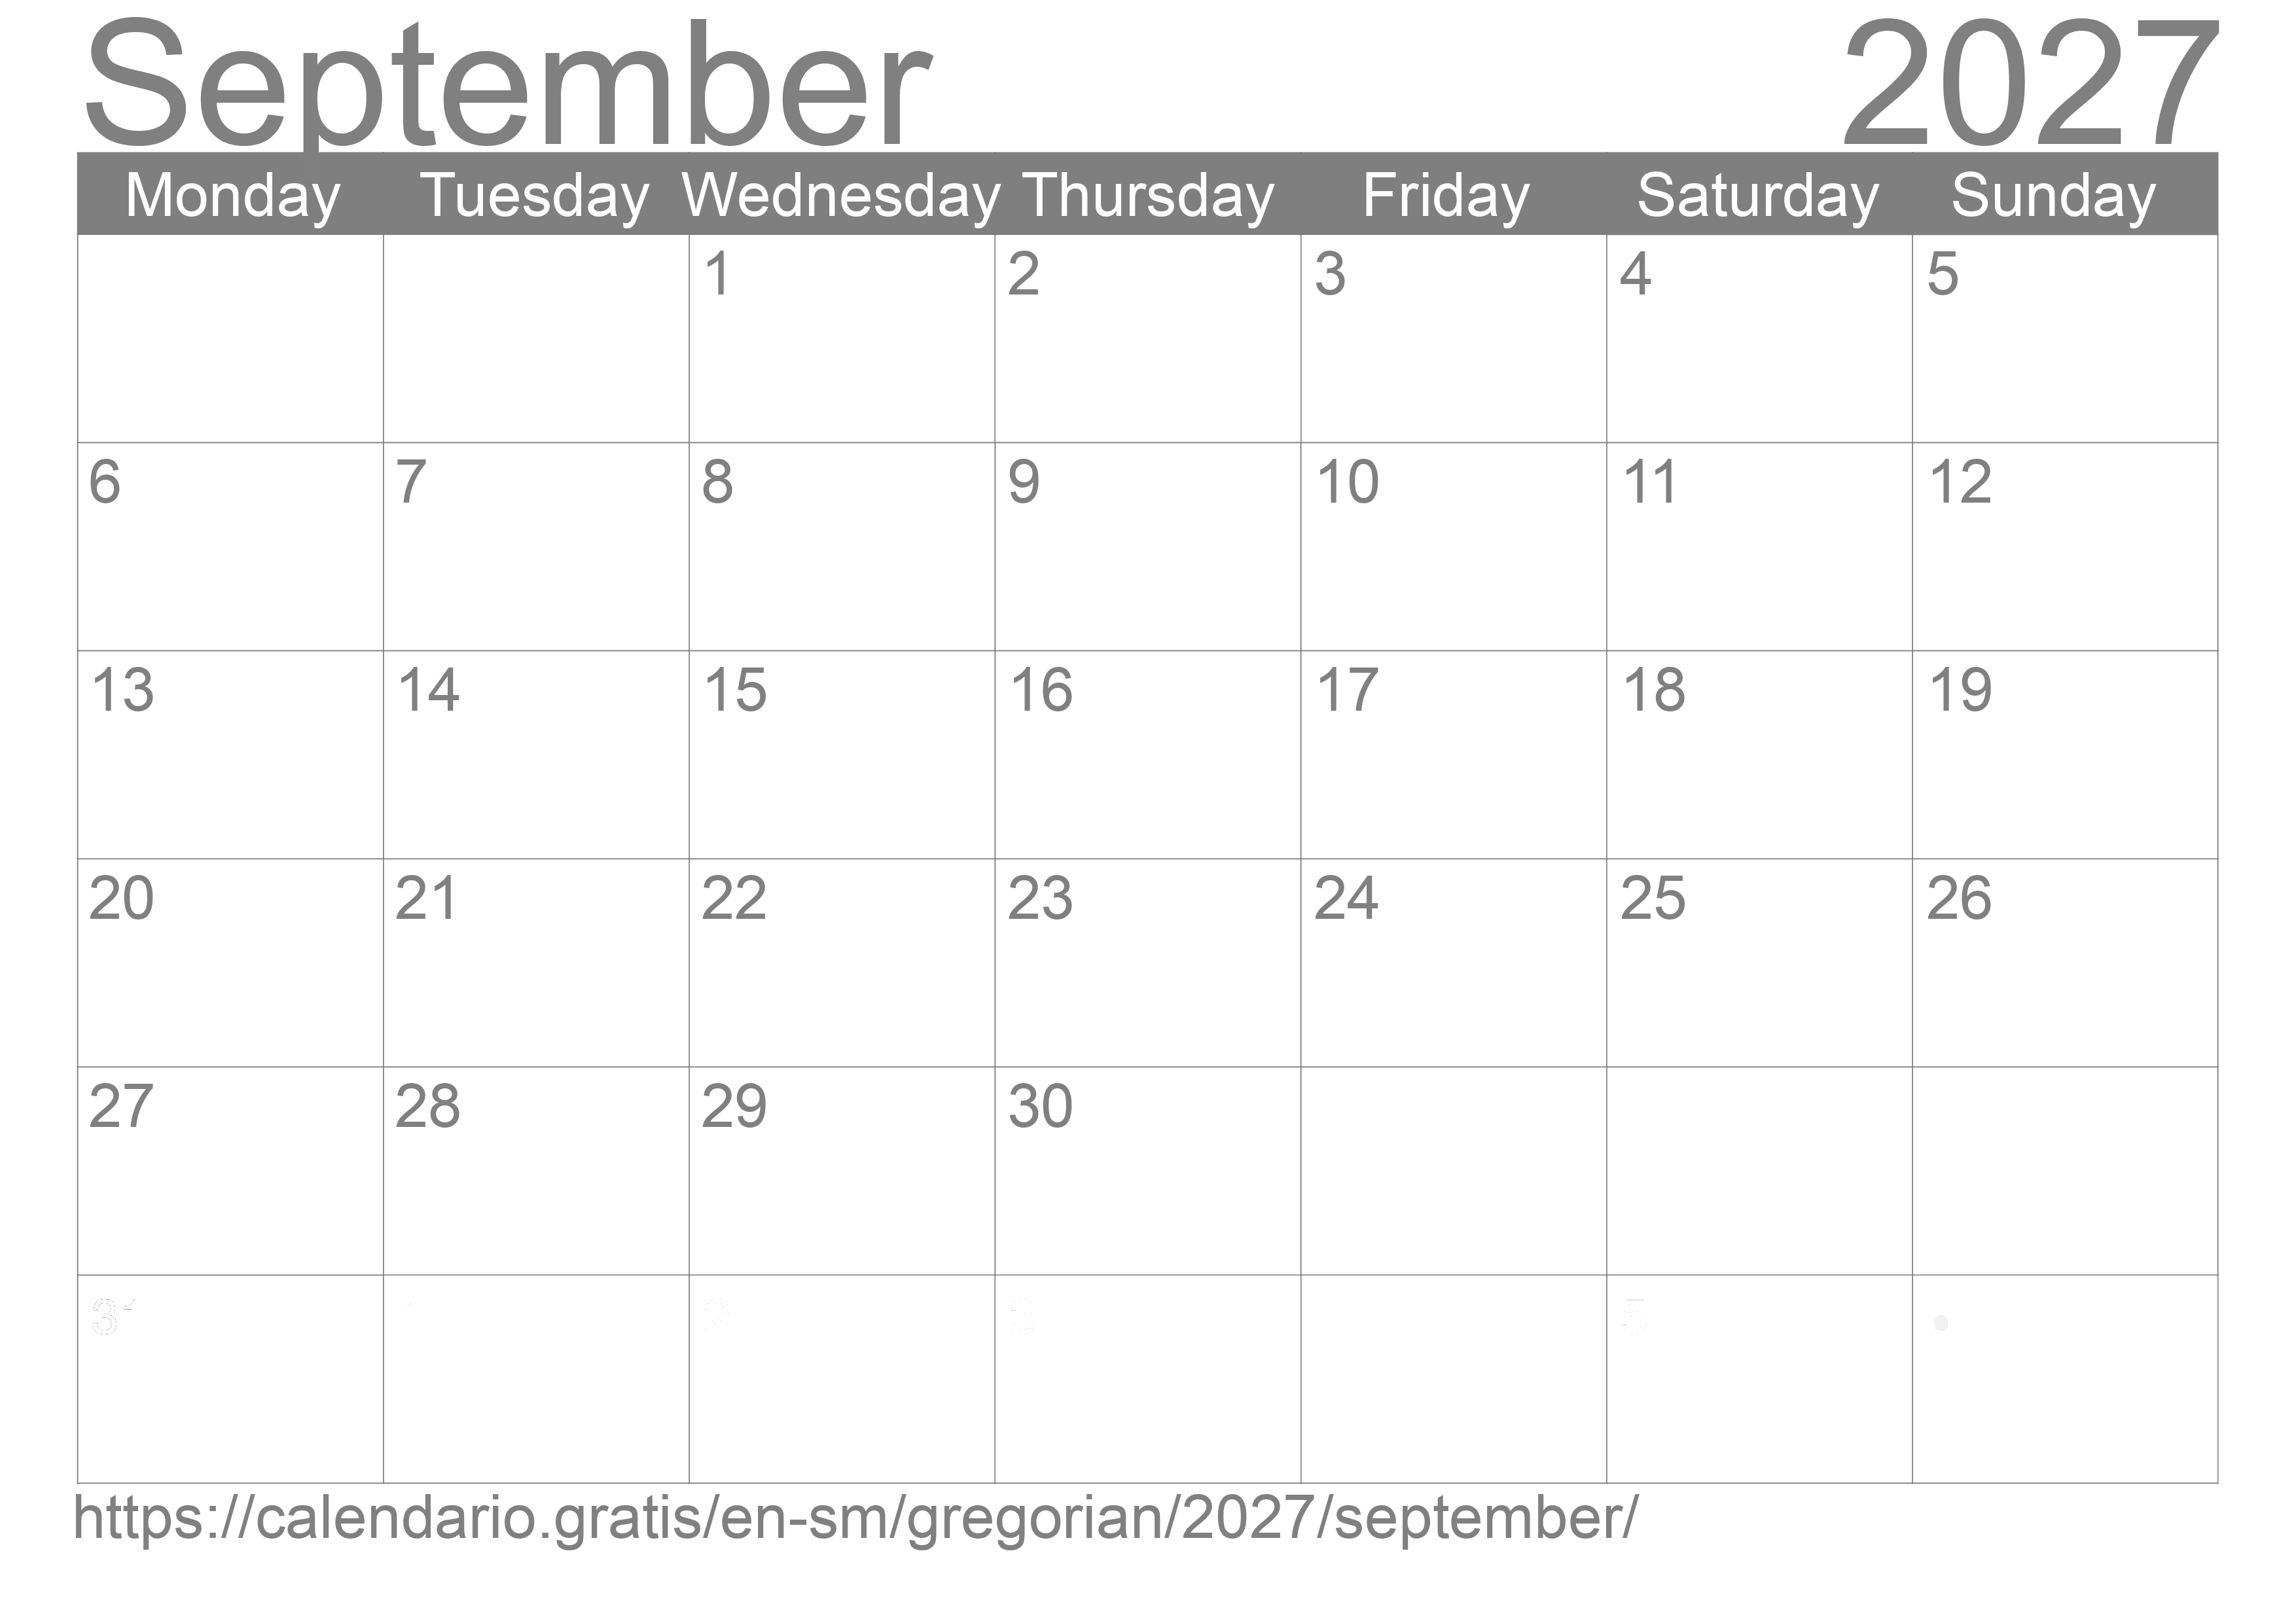 Calendar September 2027 to print